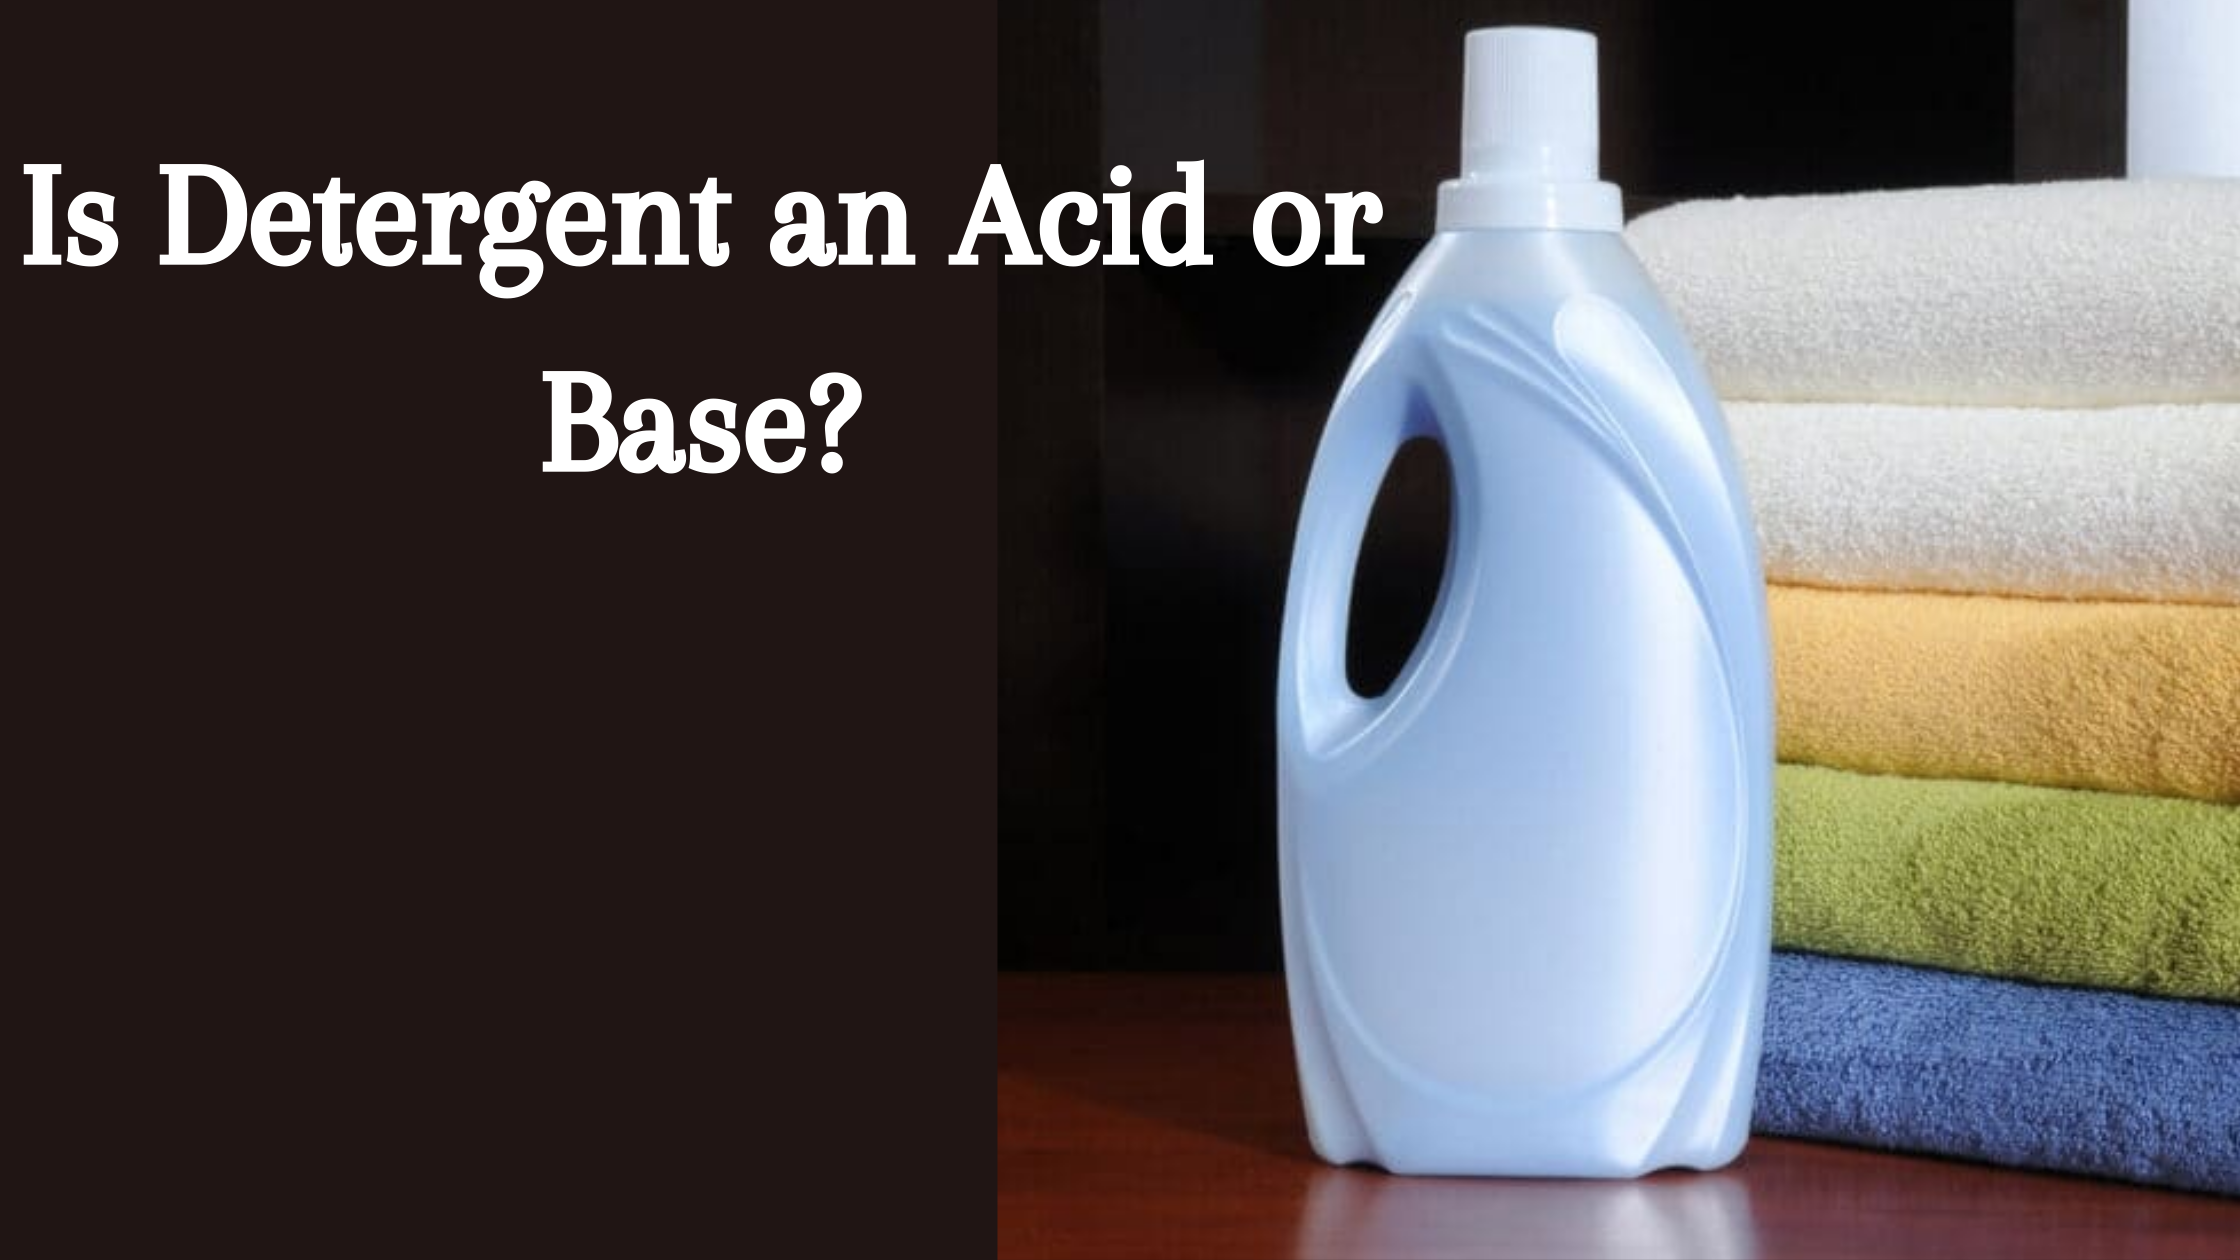 Is Detergent an Acid or Base?